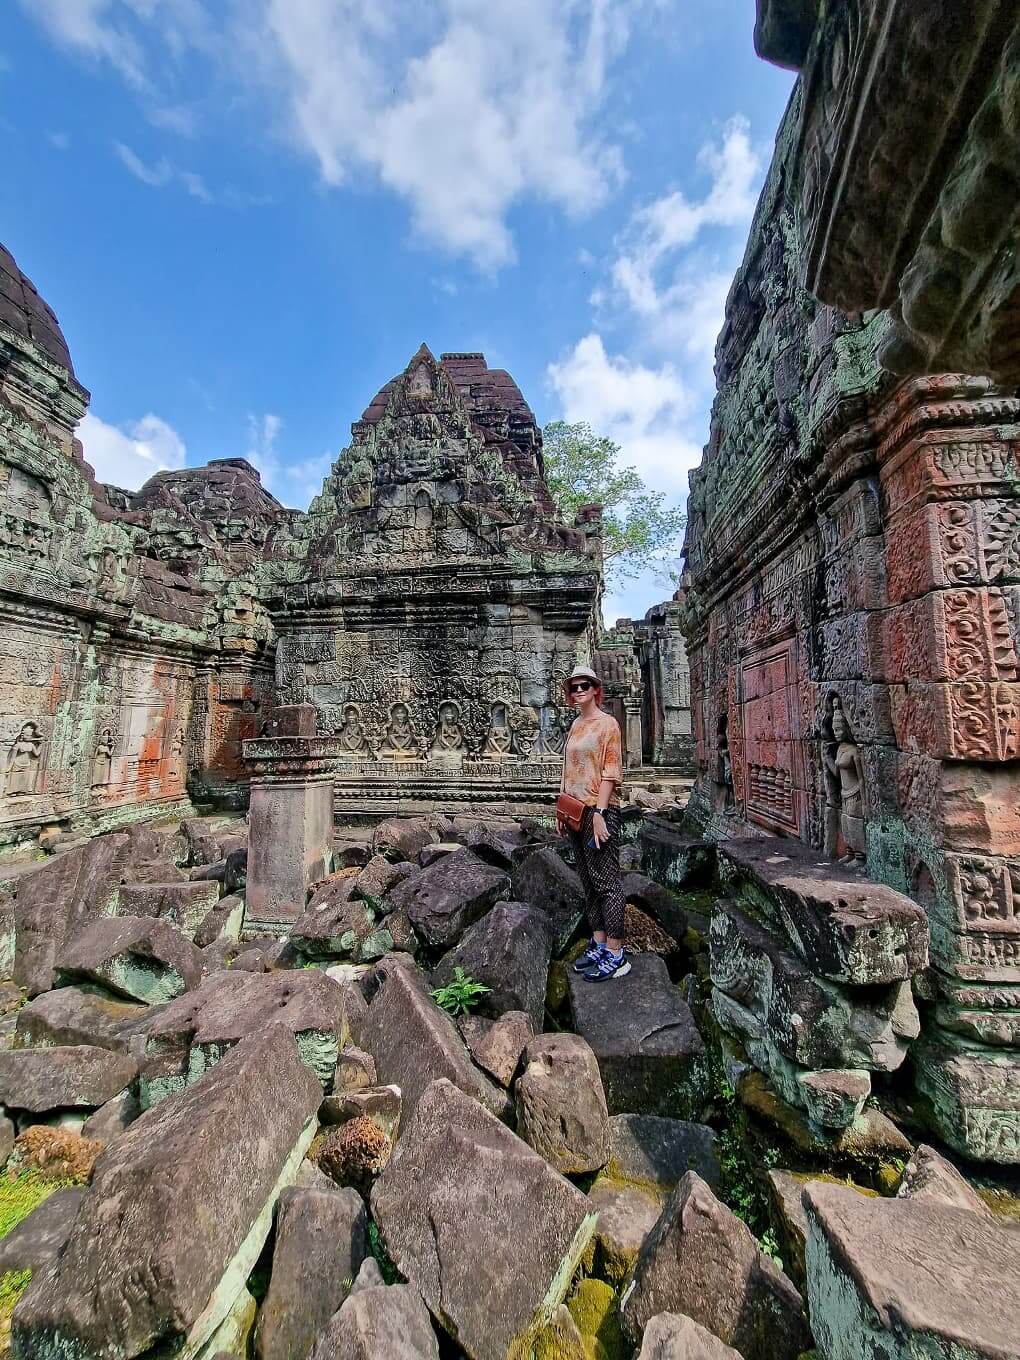 Best-of-Cambodia-8-Days-Siem-Reap-Angkor-Wat-2.jpg